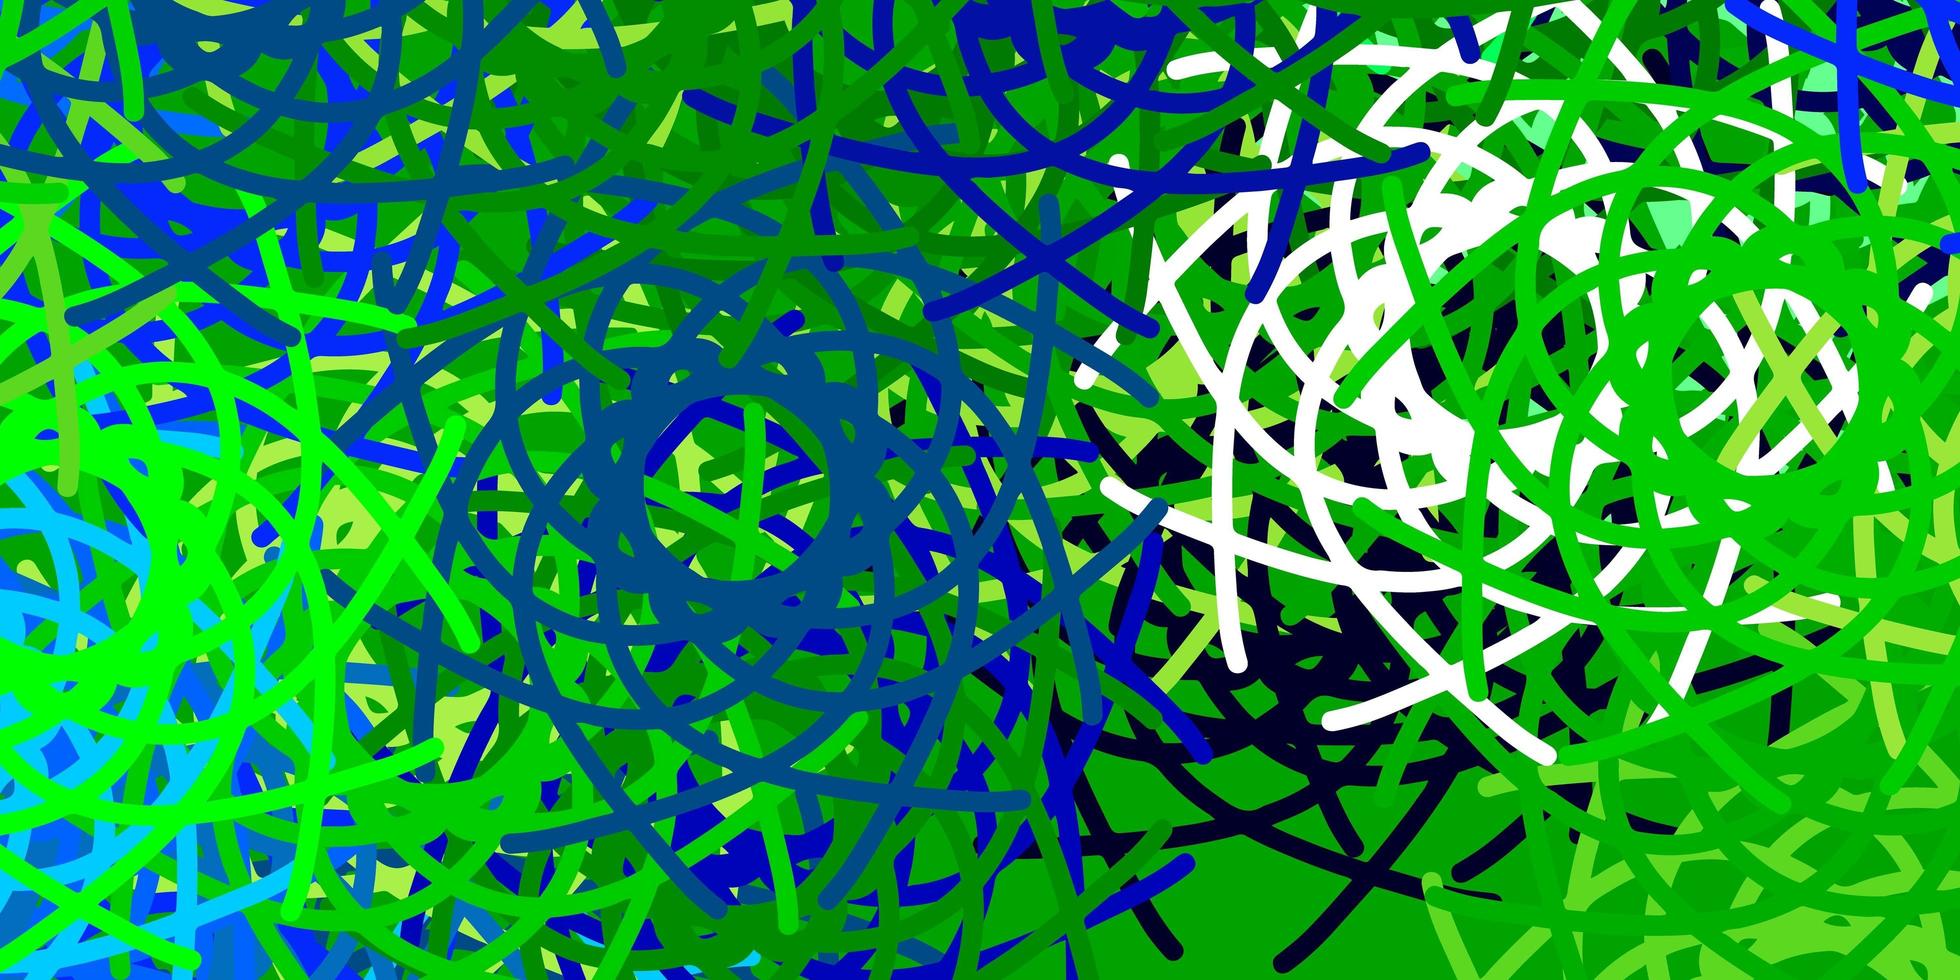 hellblaue, grüne Vektorschablone mit abstrakten Formen. vektor